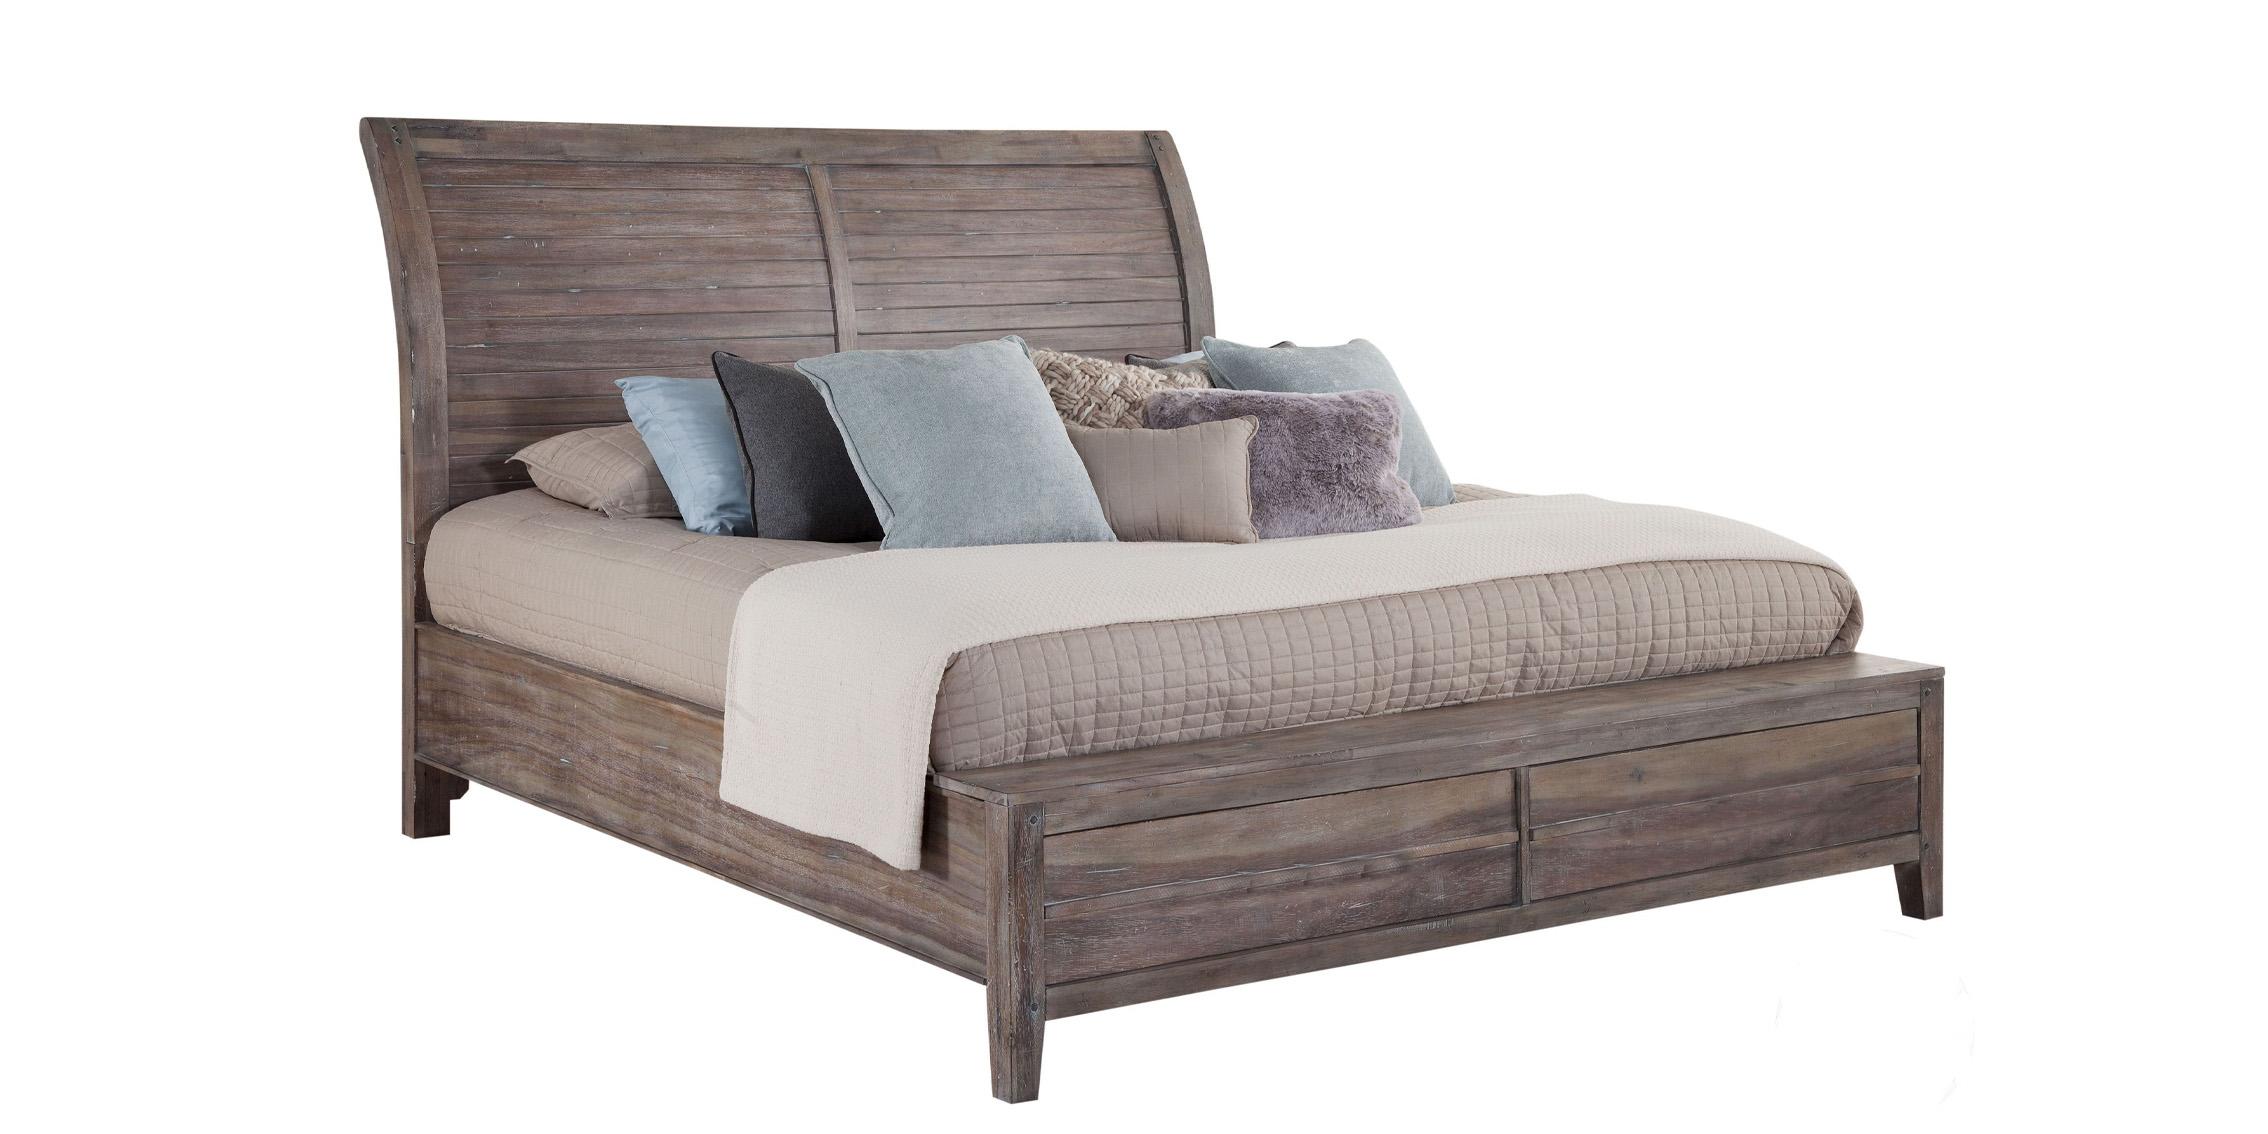 Classic, Traditional Sleigh Bed AURORA 2800-66SLP 2800-66SLPN in Driftwood, Gray 